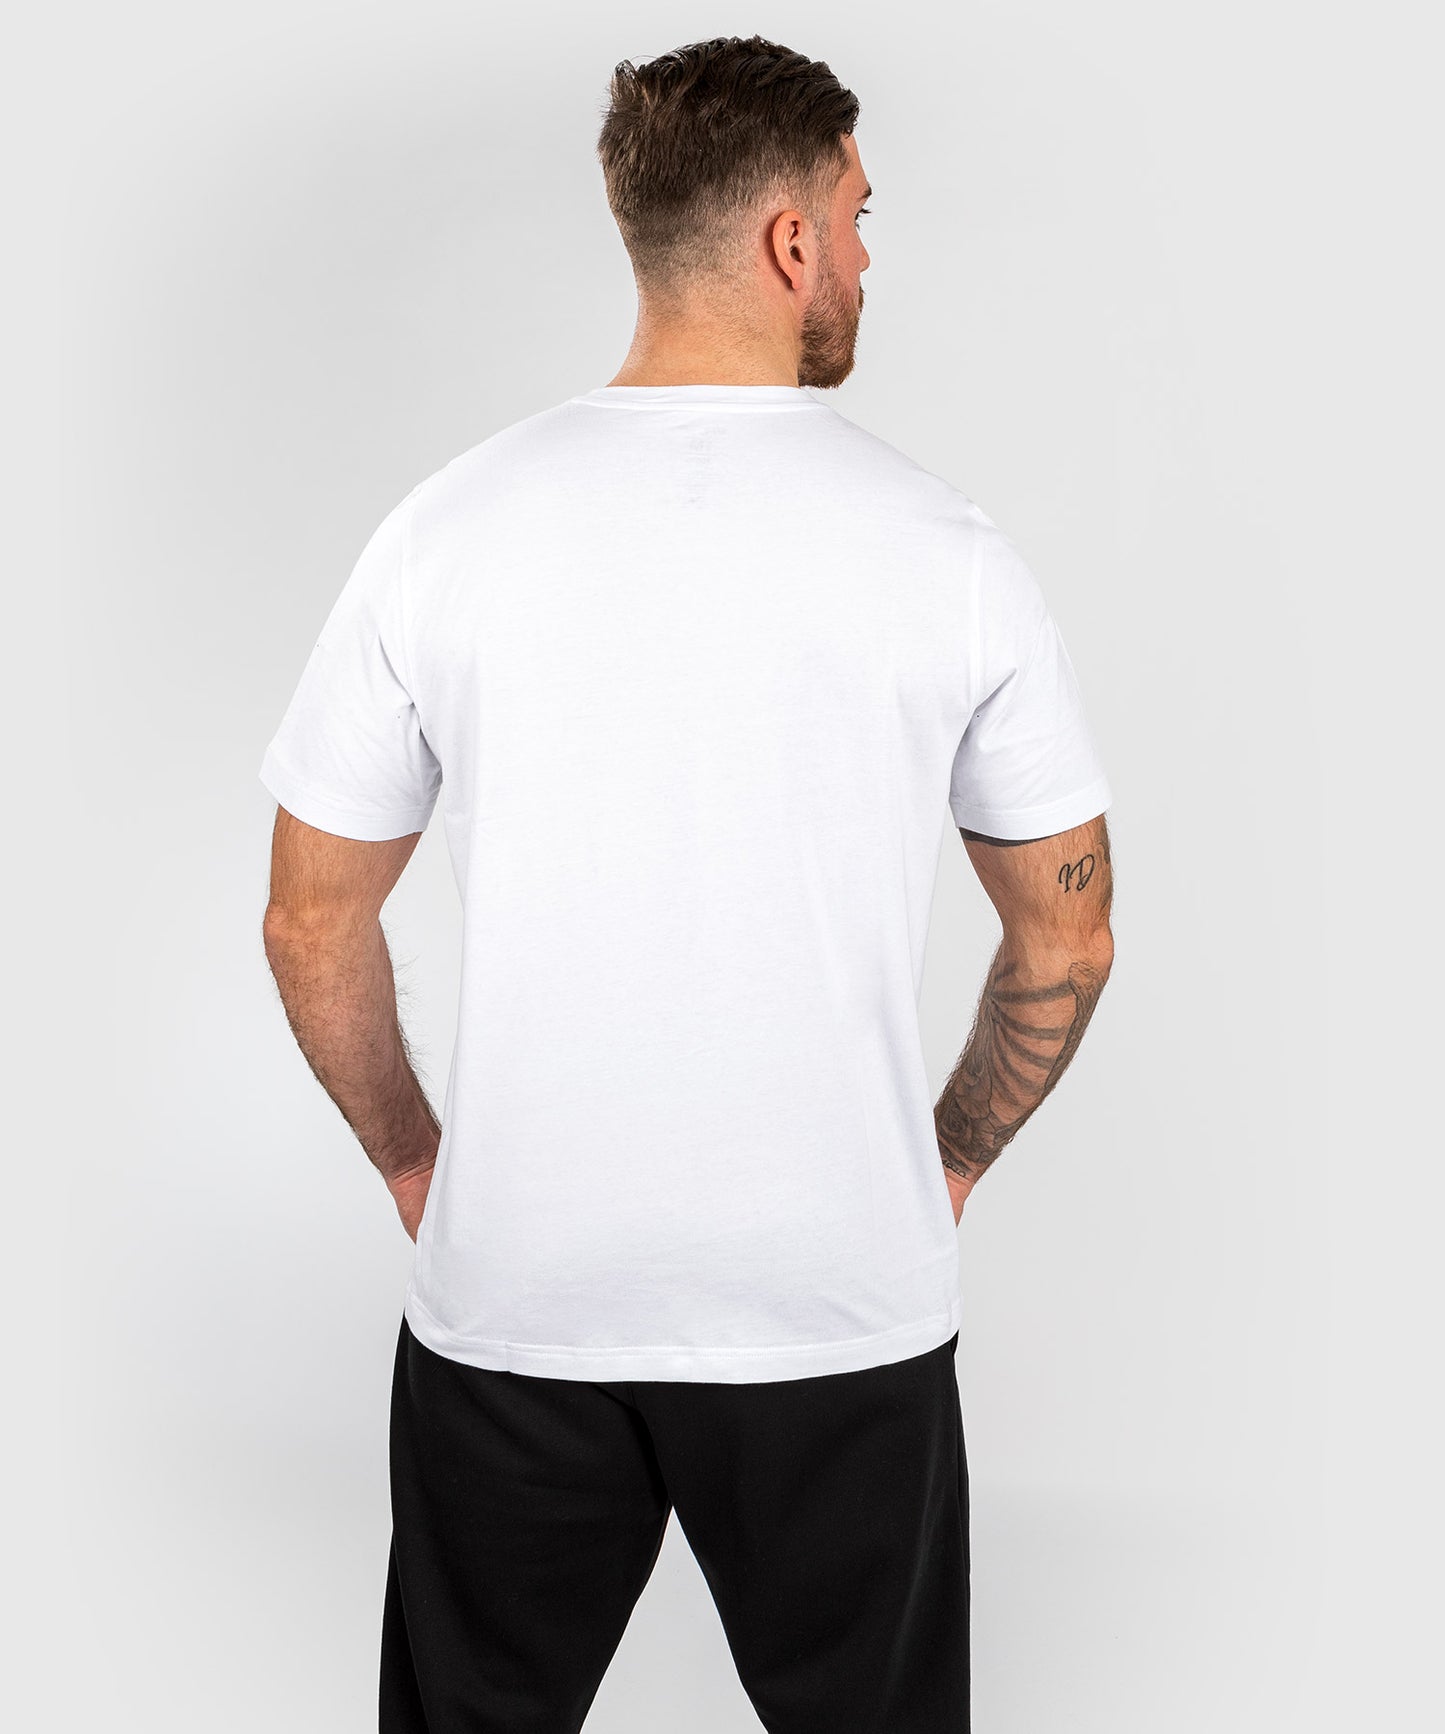 UFC Adrenaline by Venum Replica  Men’s Short-sleeve T-shirt - White